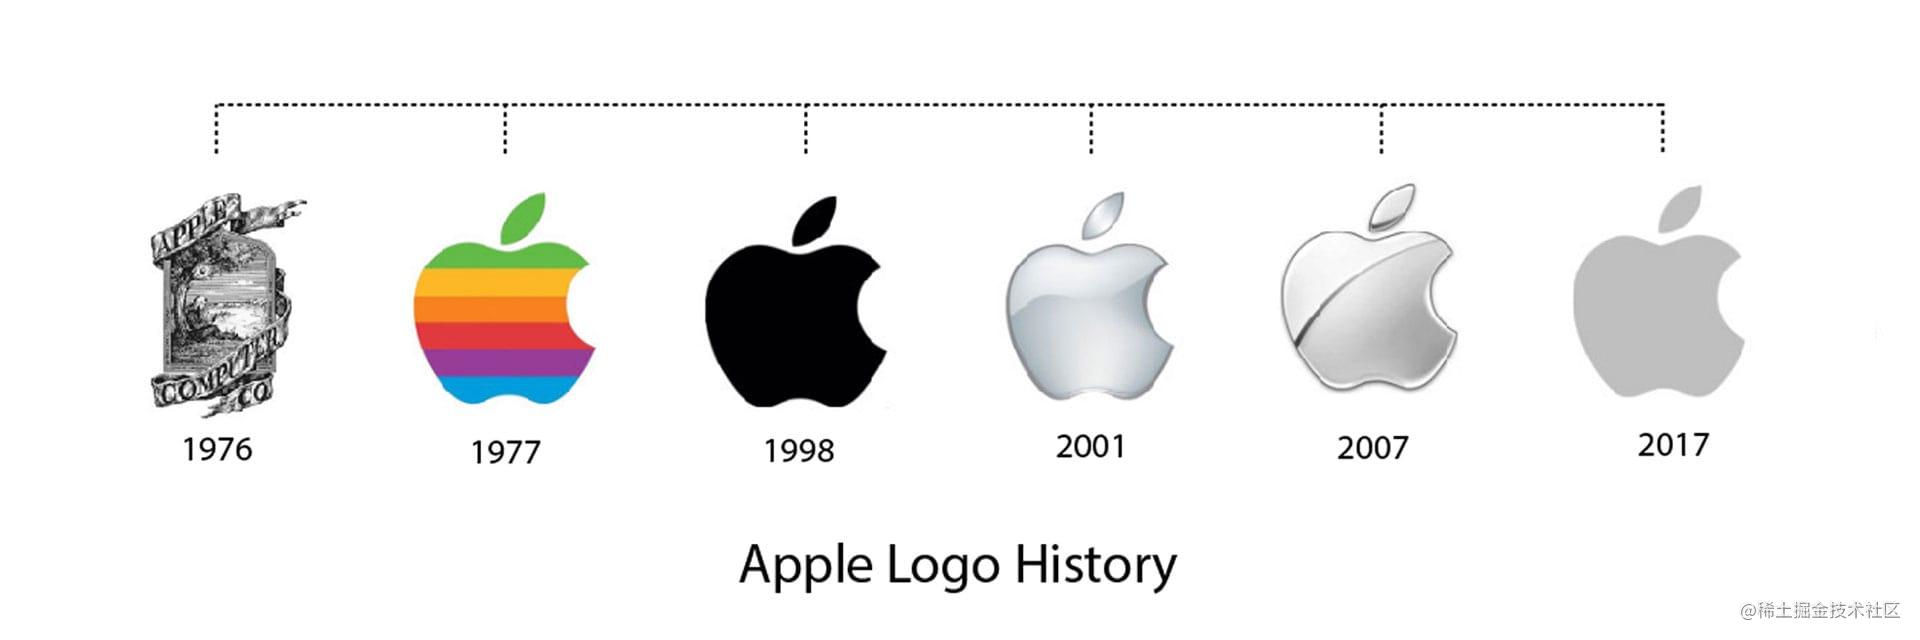 Apple-Logo-History.jpg